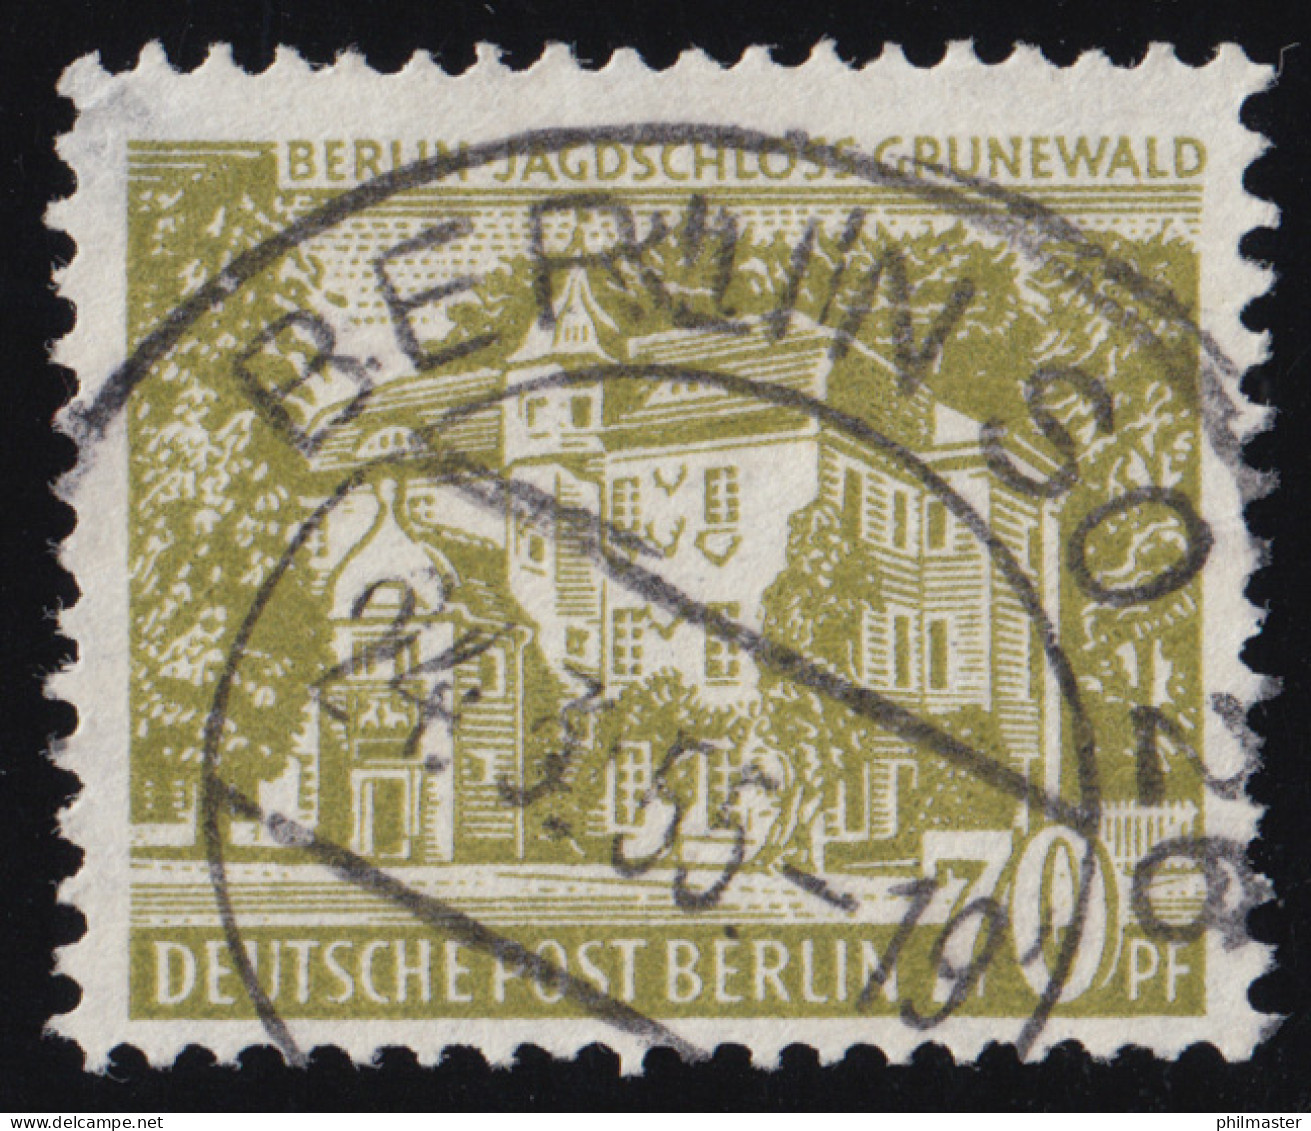 123 Berliner Bauten 70 Pf, Jagdschloß Grunewald O Gestempelt - Used Stamps